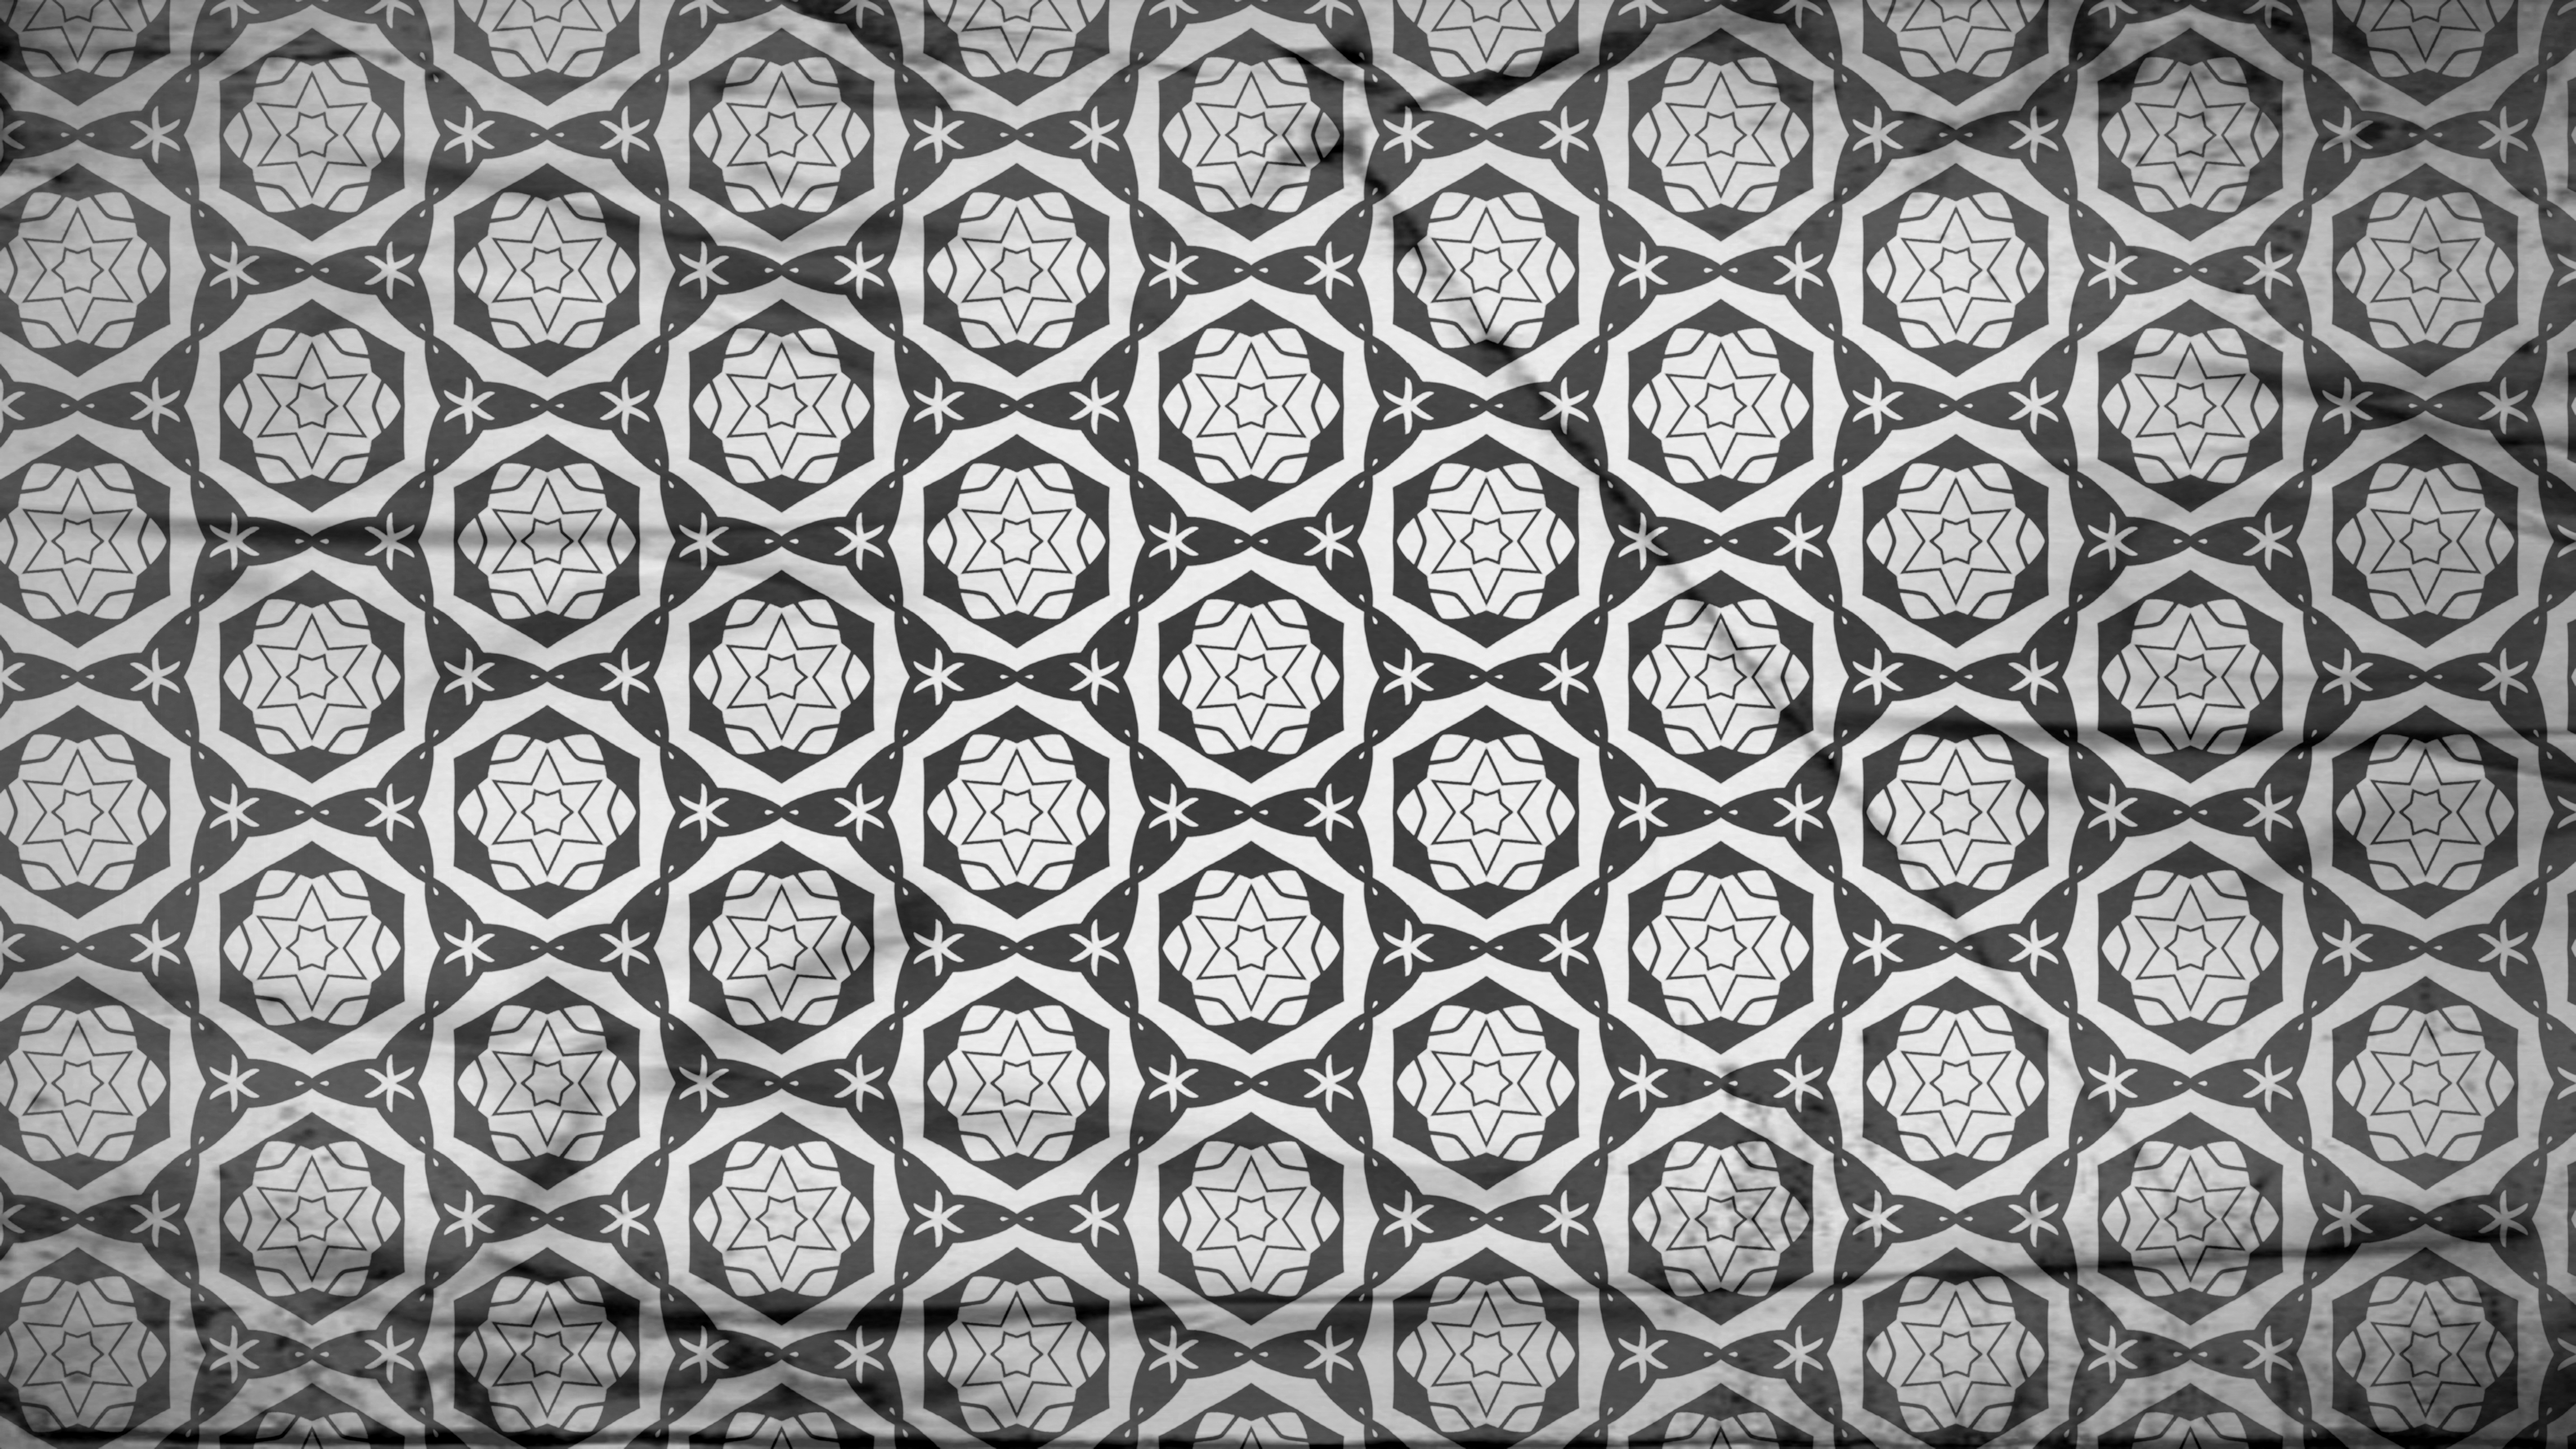 Free Dark Grey Seamless Floral Geometric Wallpaper Pattern